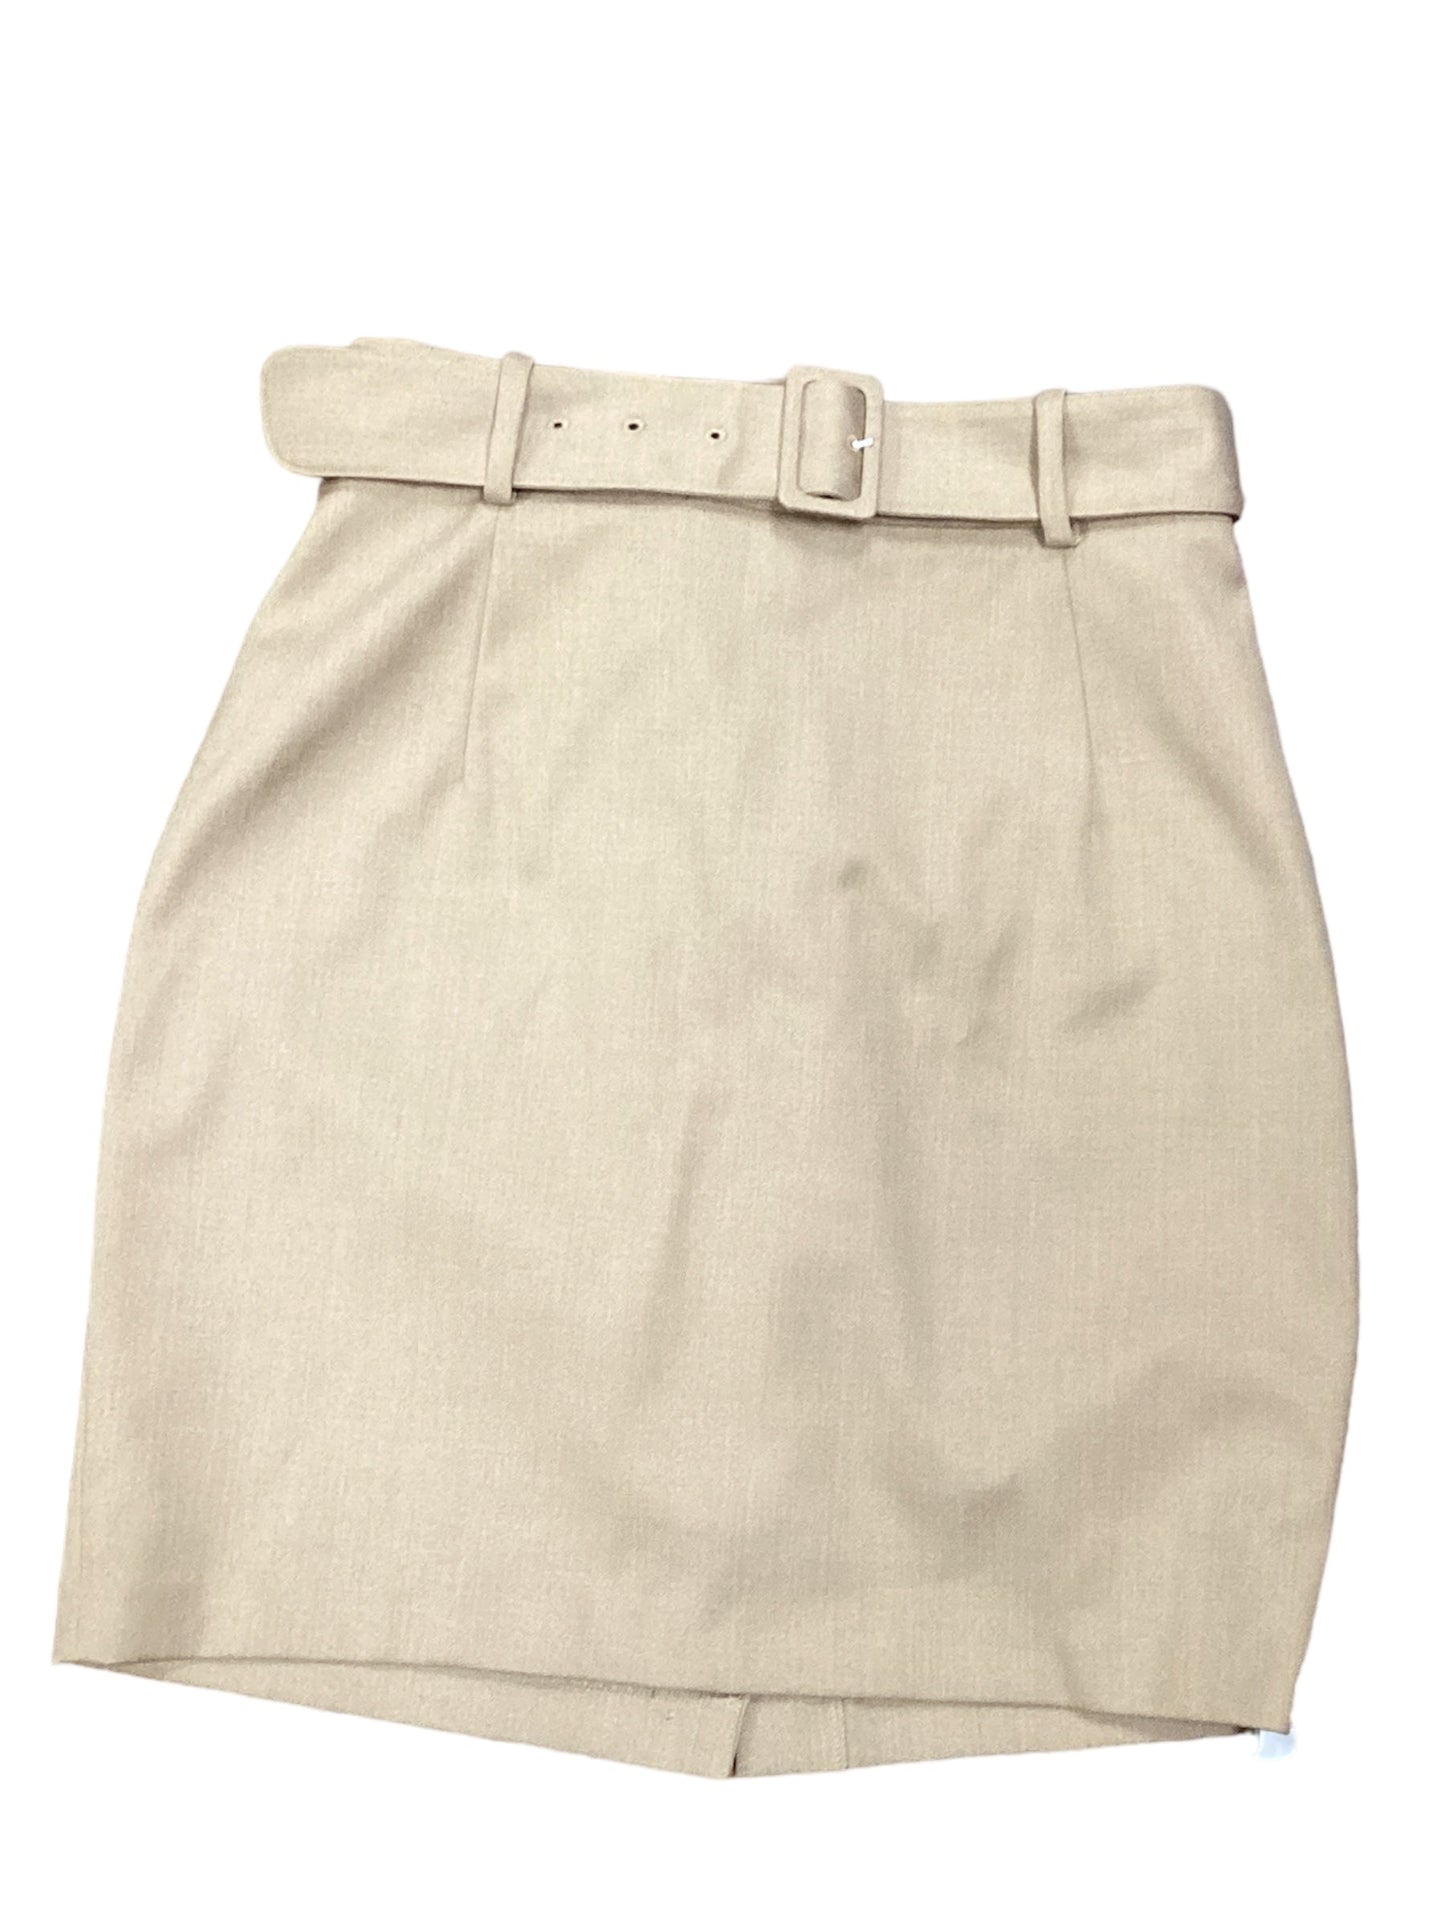 Skirt Mini & Short By H&m  Size: 10